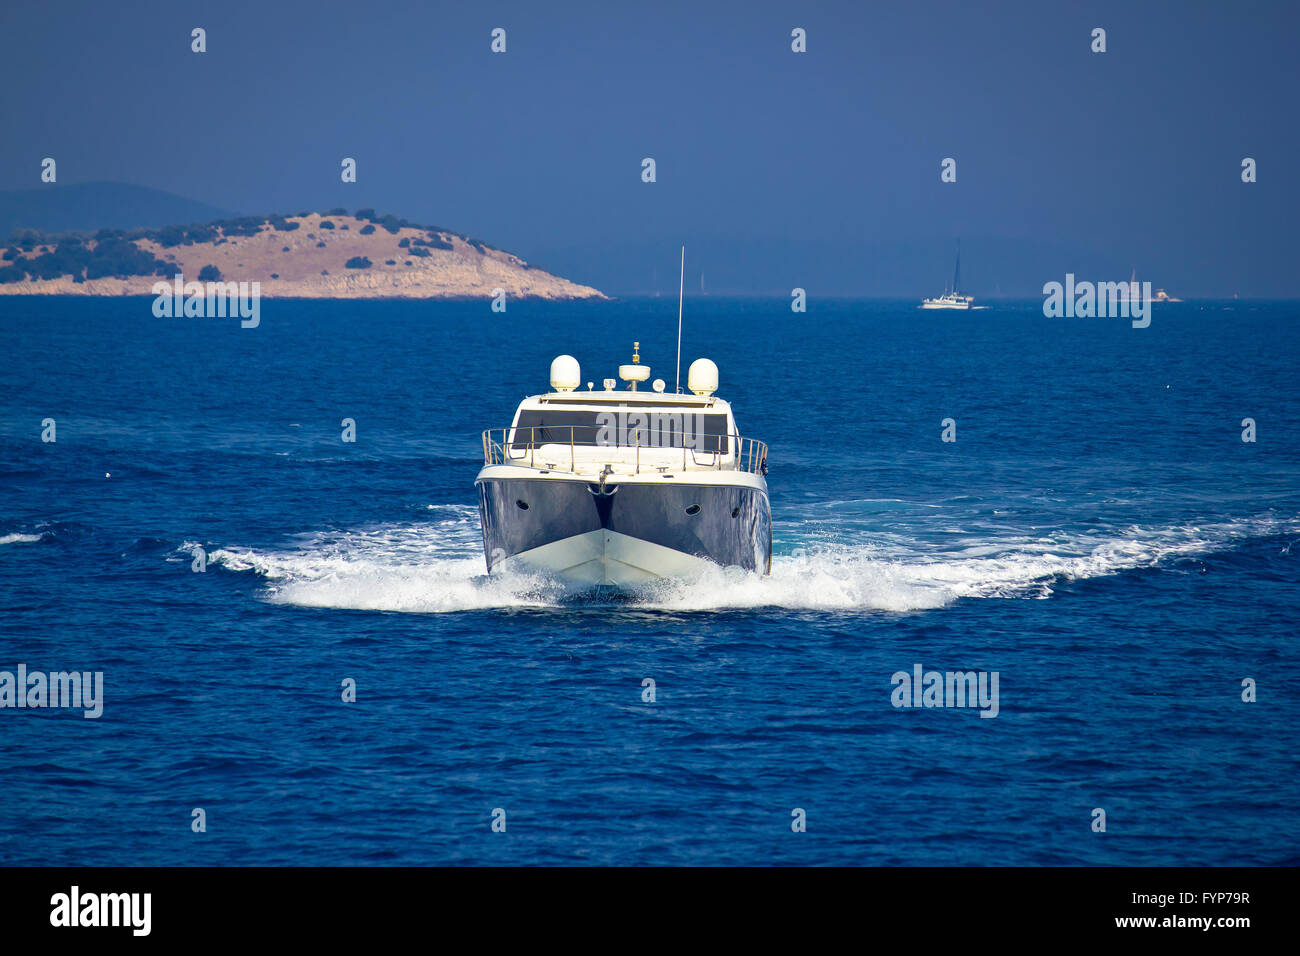 Yacht view on bule sea Stock Photo